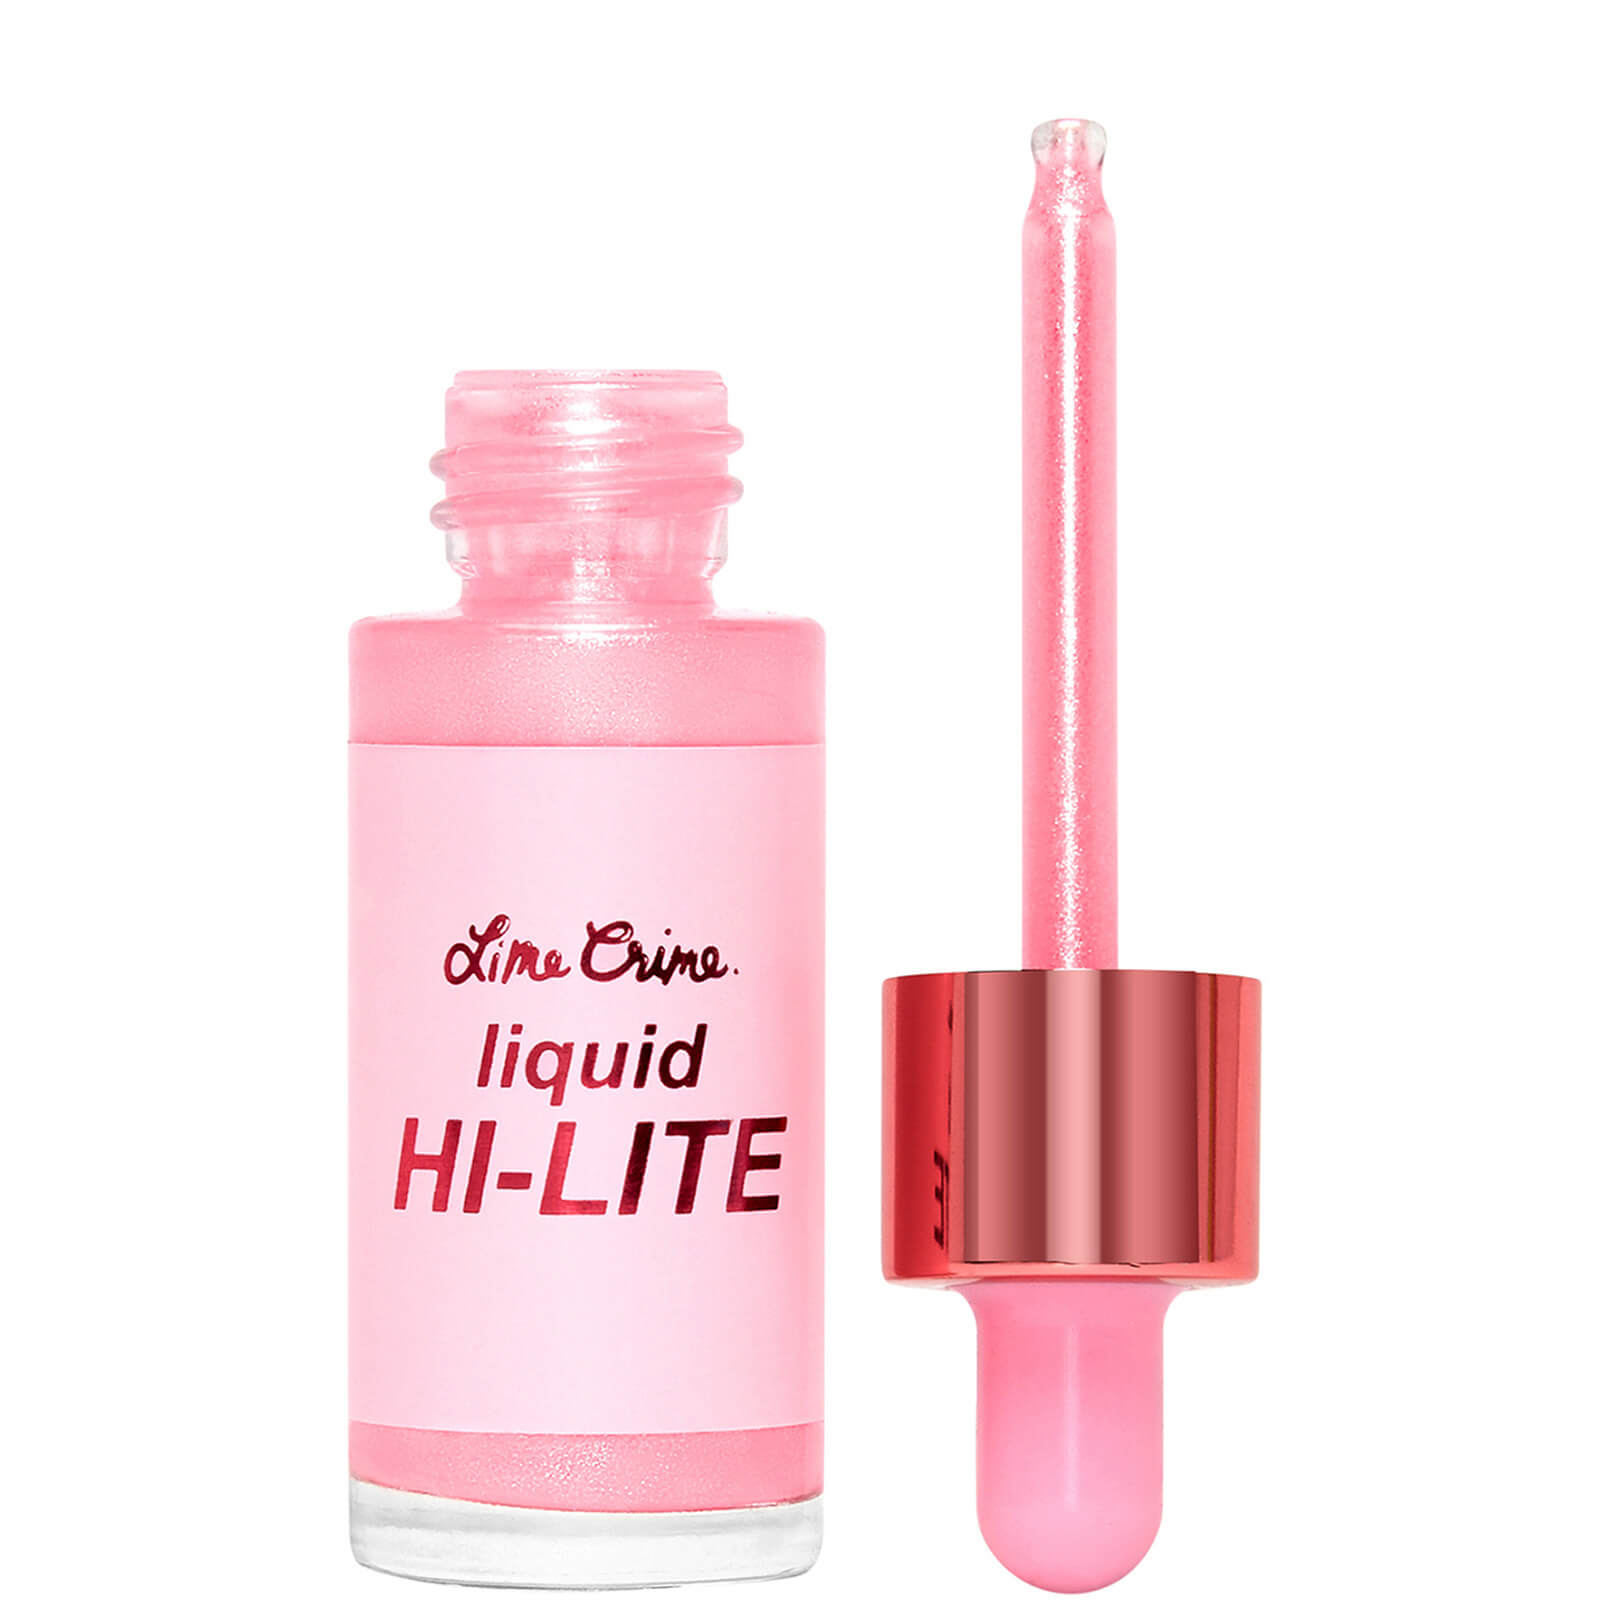 Image of Lime Crime Liquid Hi-lite (Various Shades) - Pink Glaze